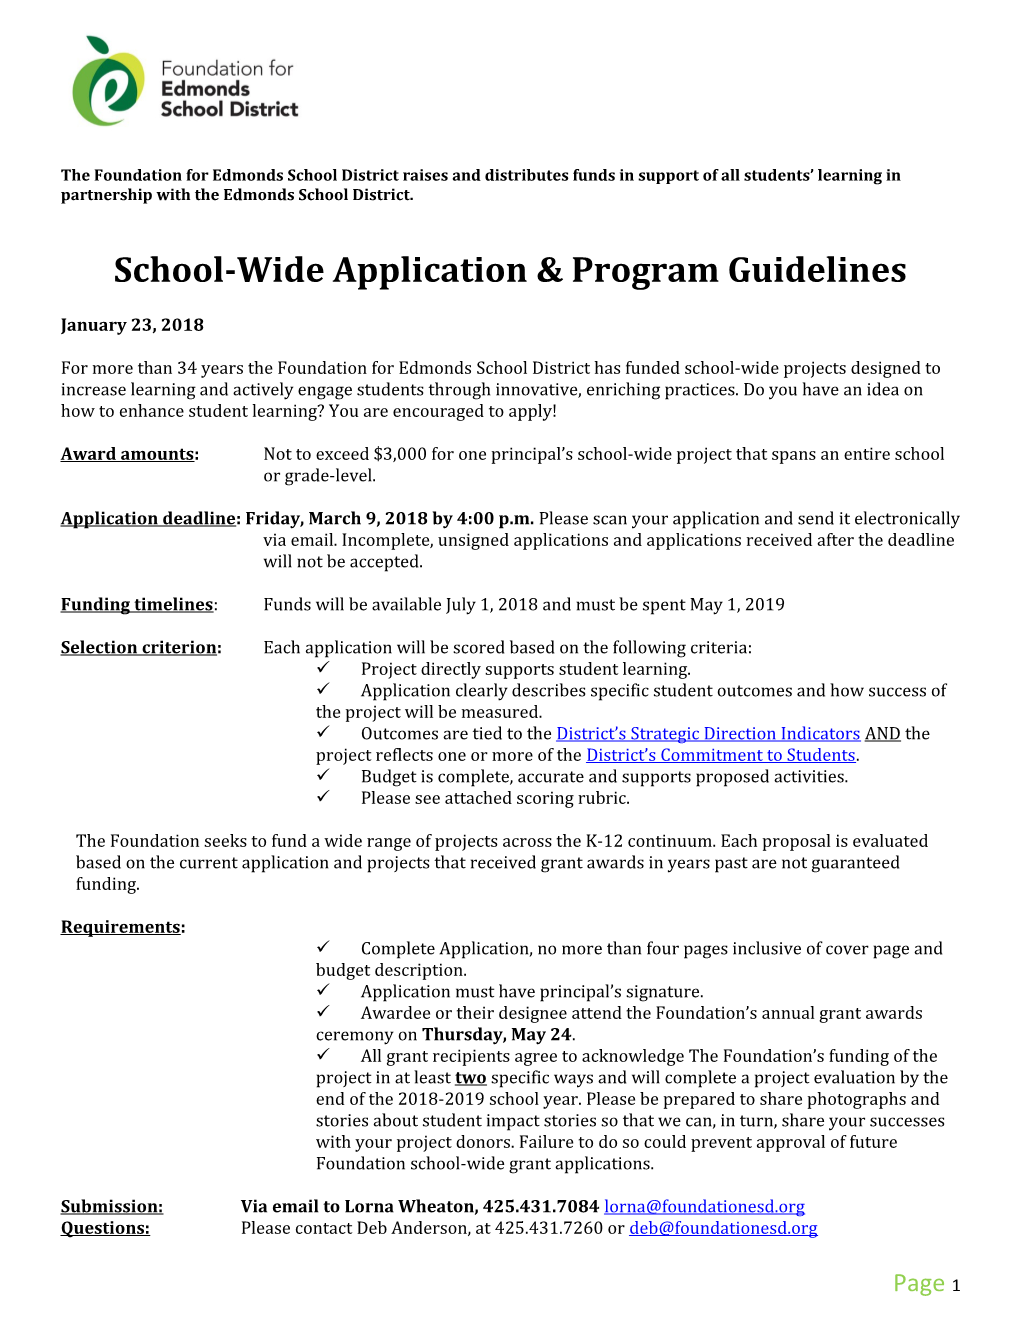 School-Wideapplicationprogram Guidelines